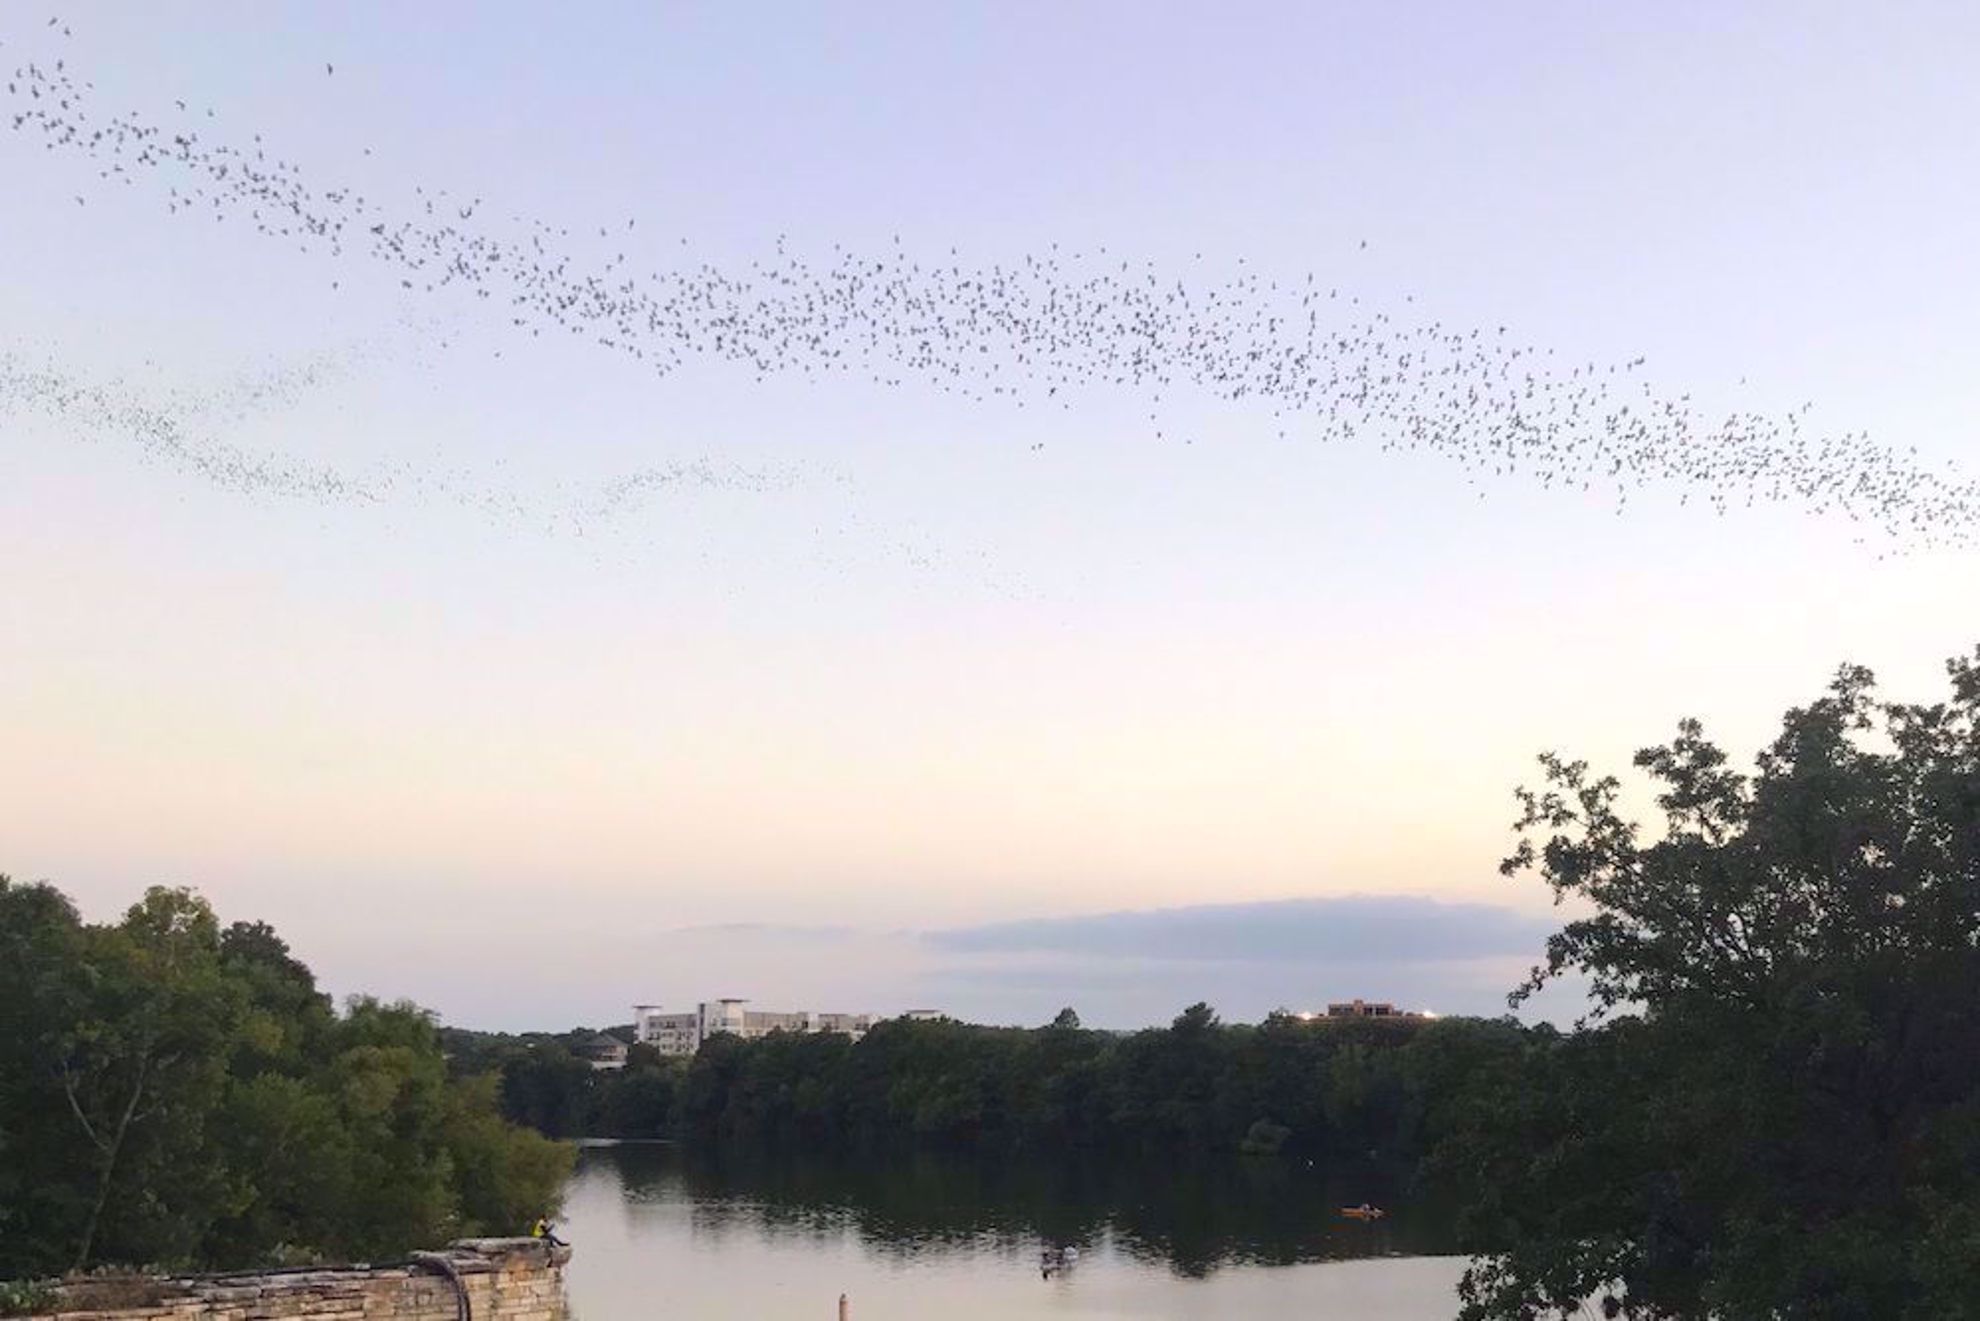 Bats emerge over the river Austin